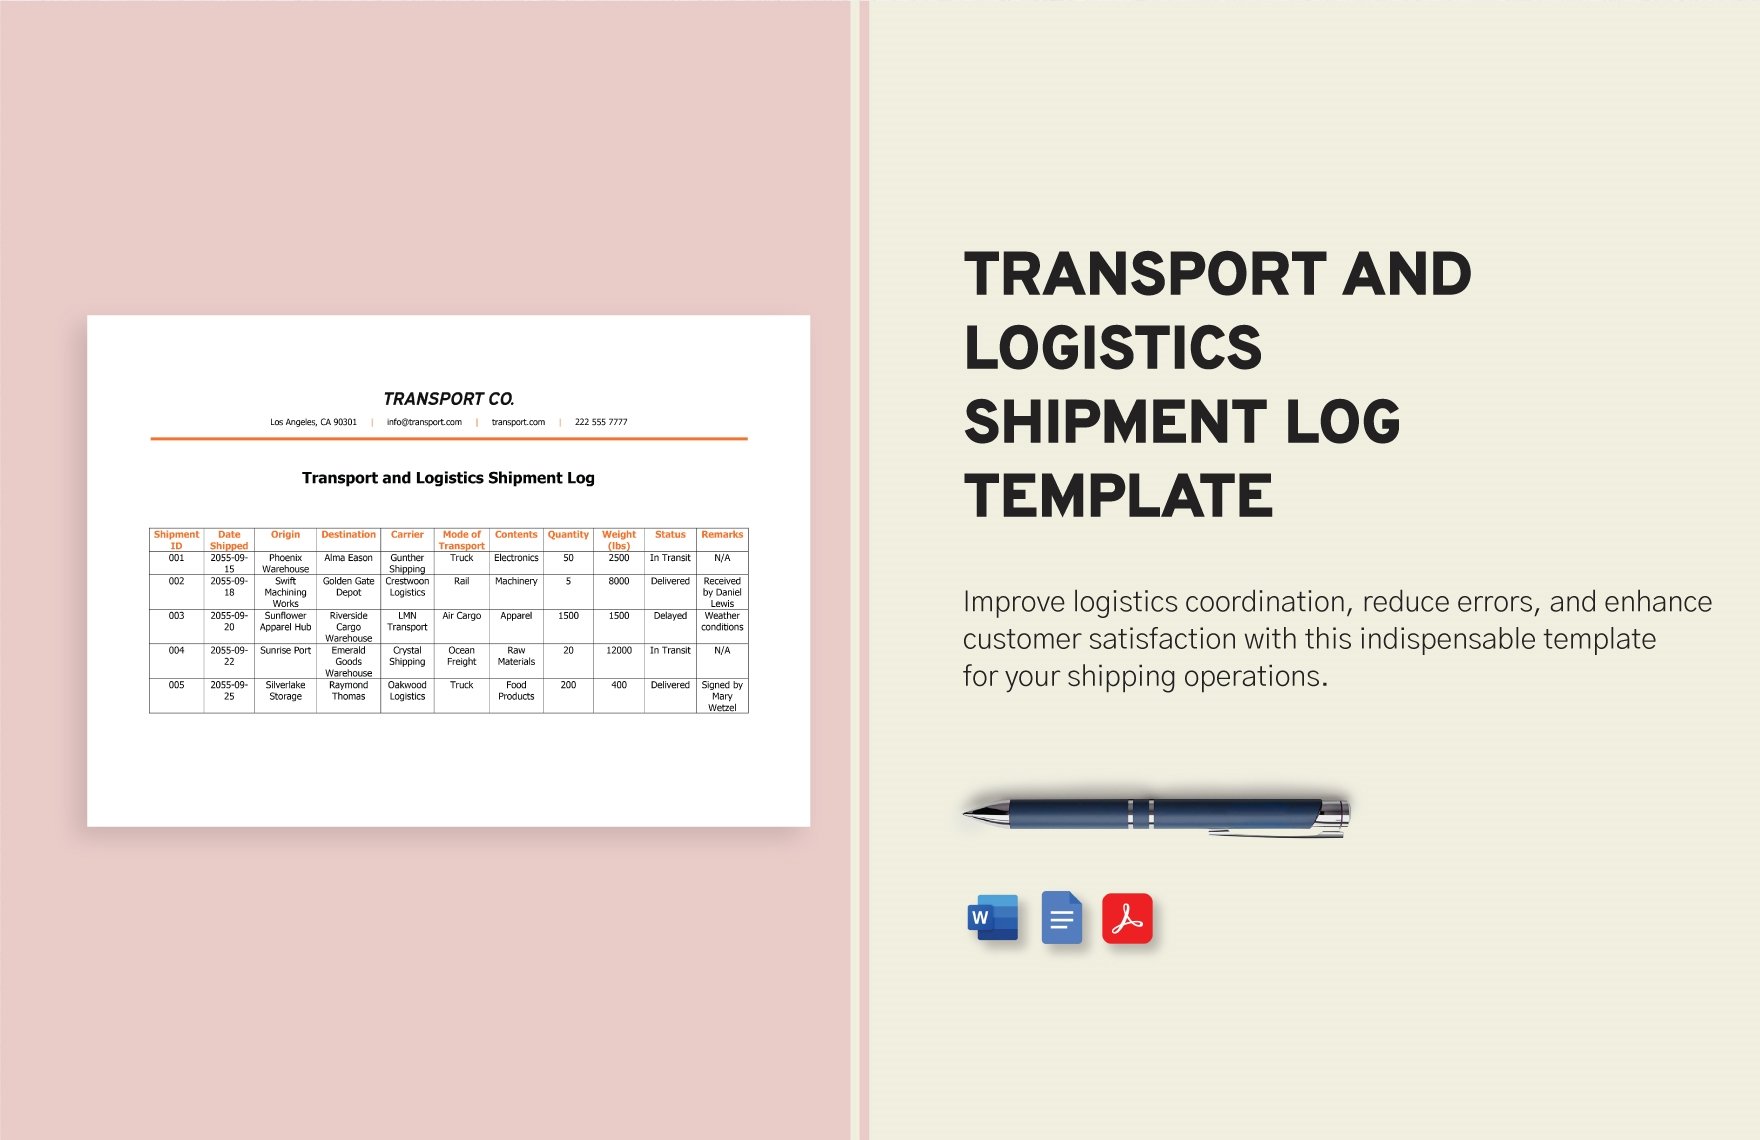 Transport and Logistics Shipment Log Template